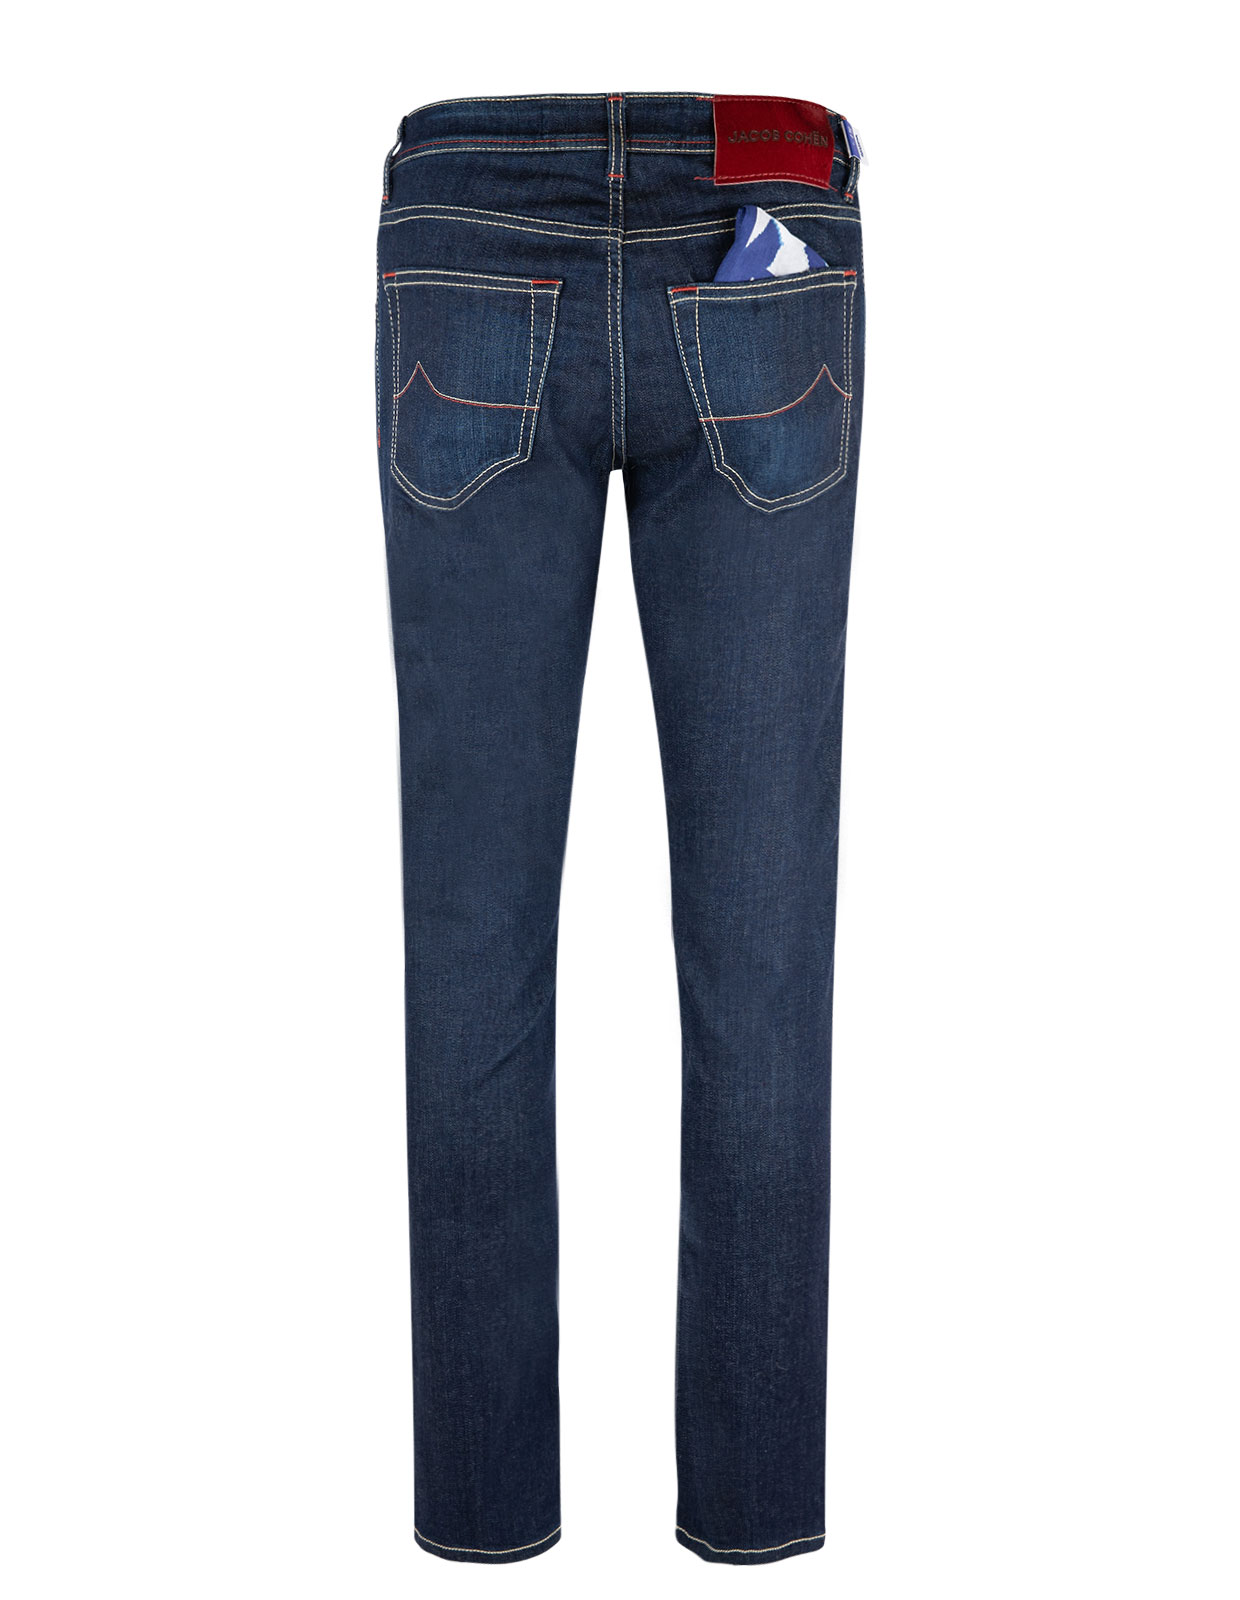 Nick J622 Jeans Denim Stretch Dark Blue